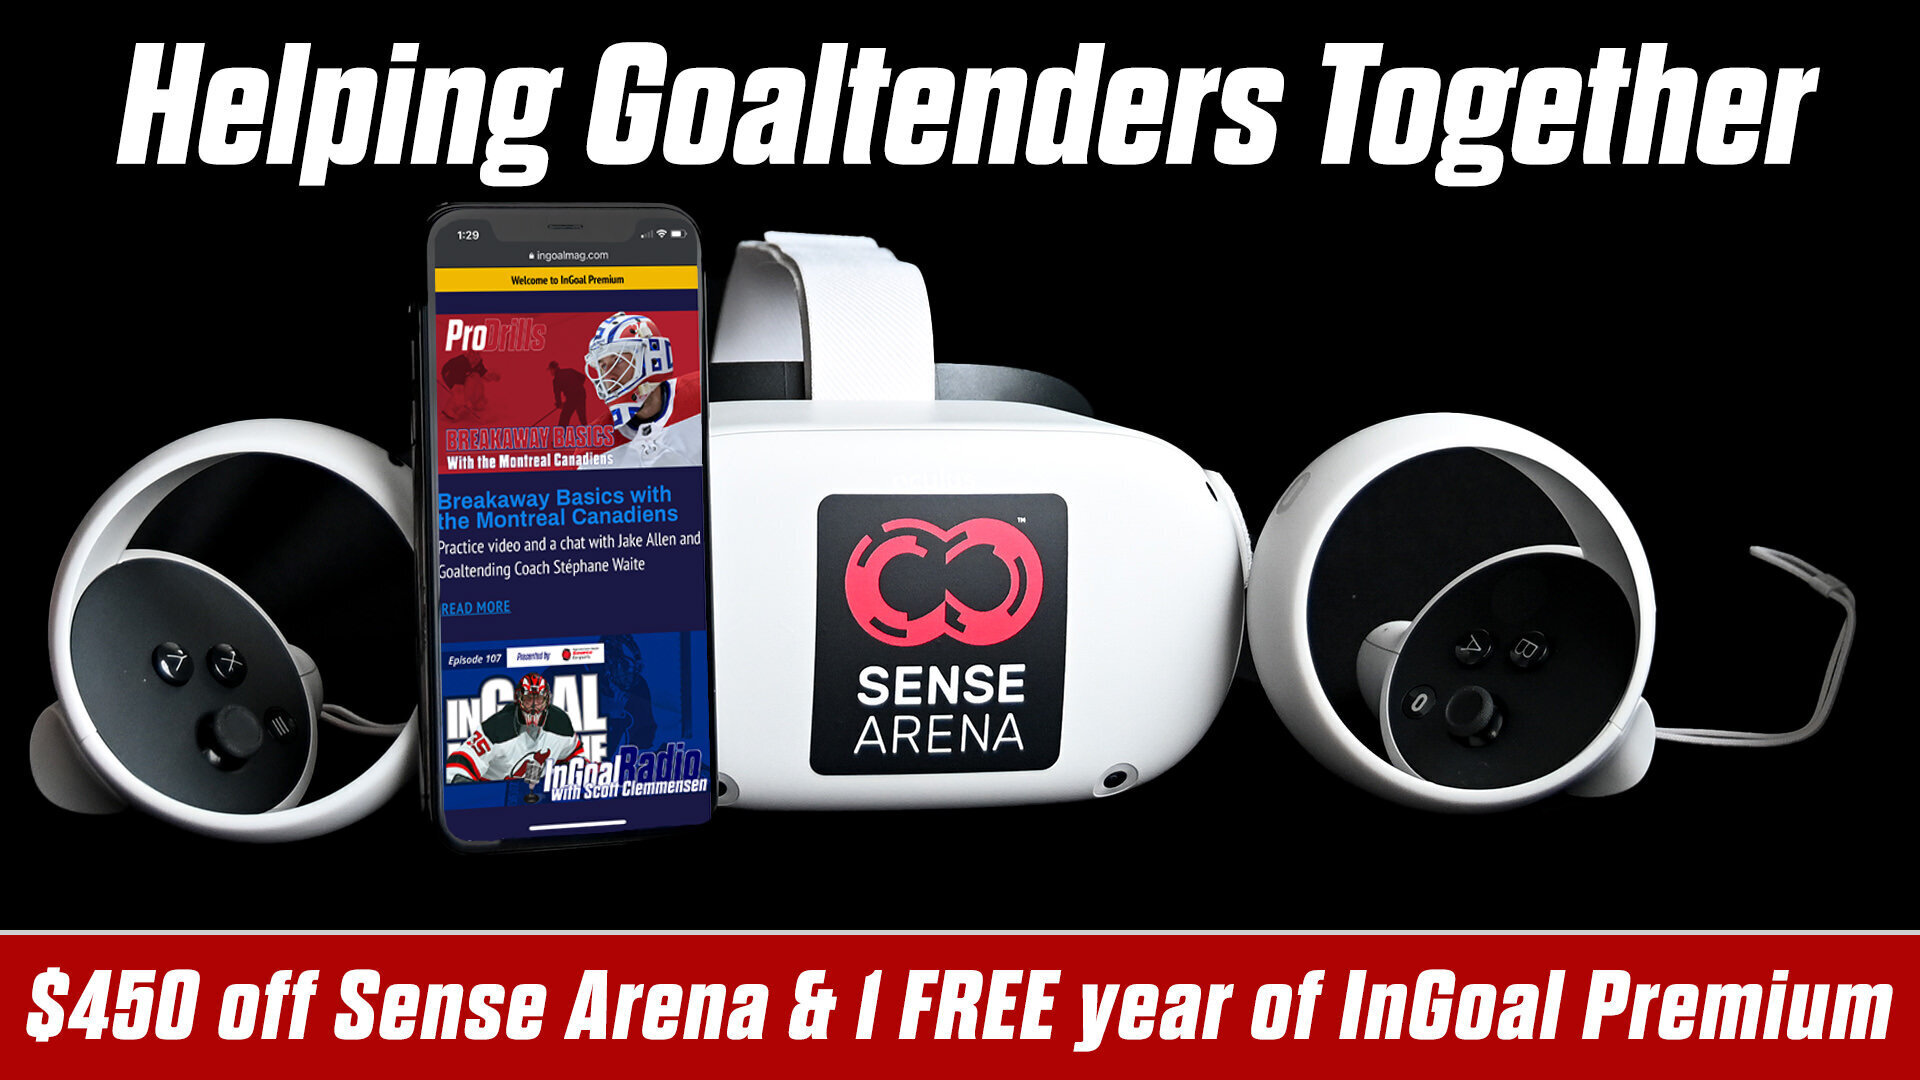 Get Sense Arena for $450 off plus 1 free year of InGoal Premium